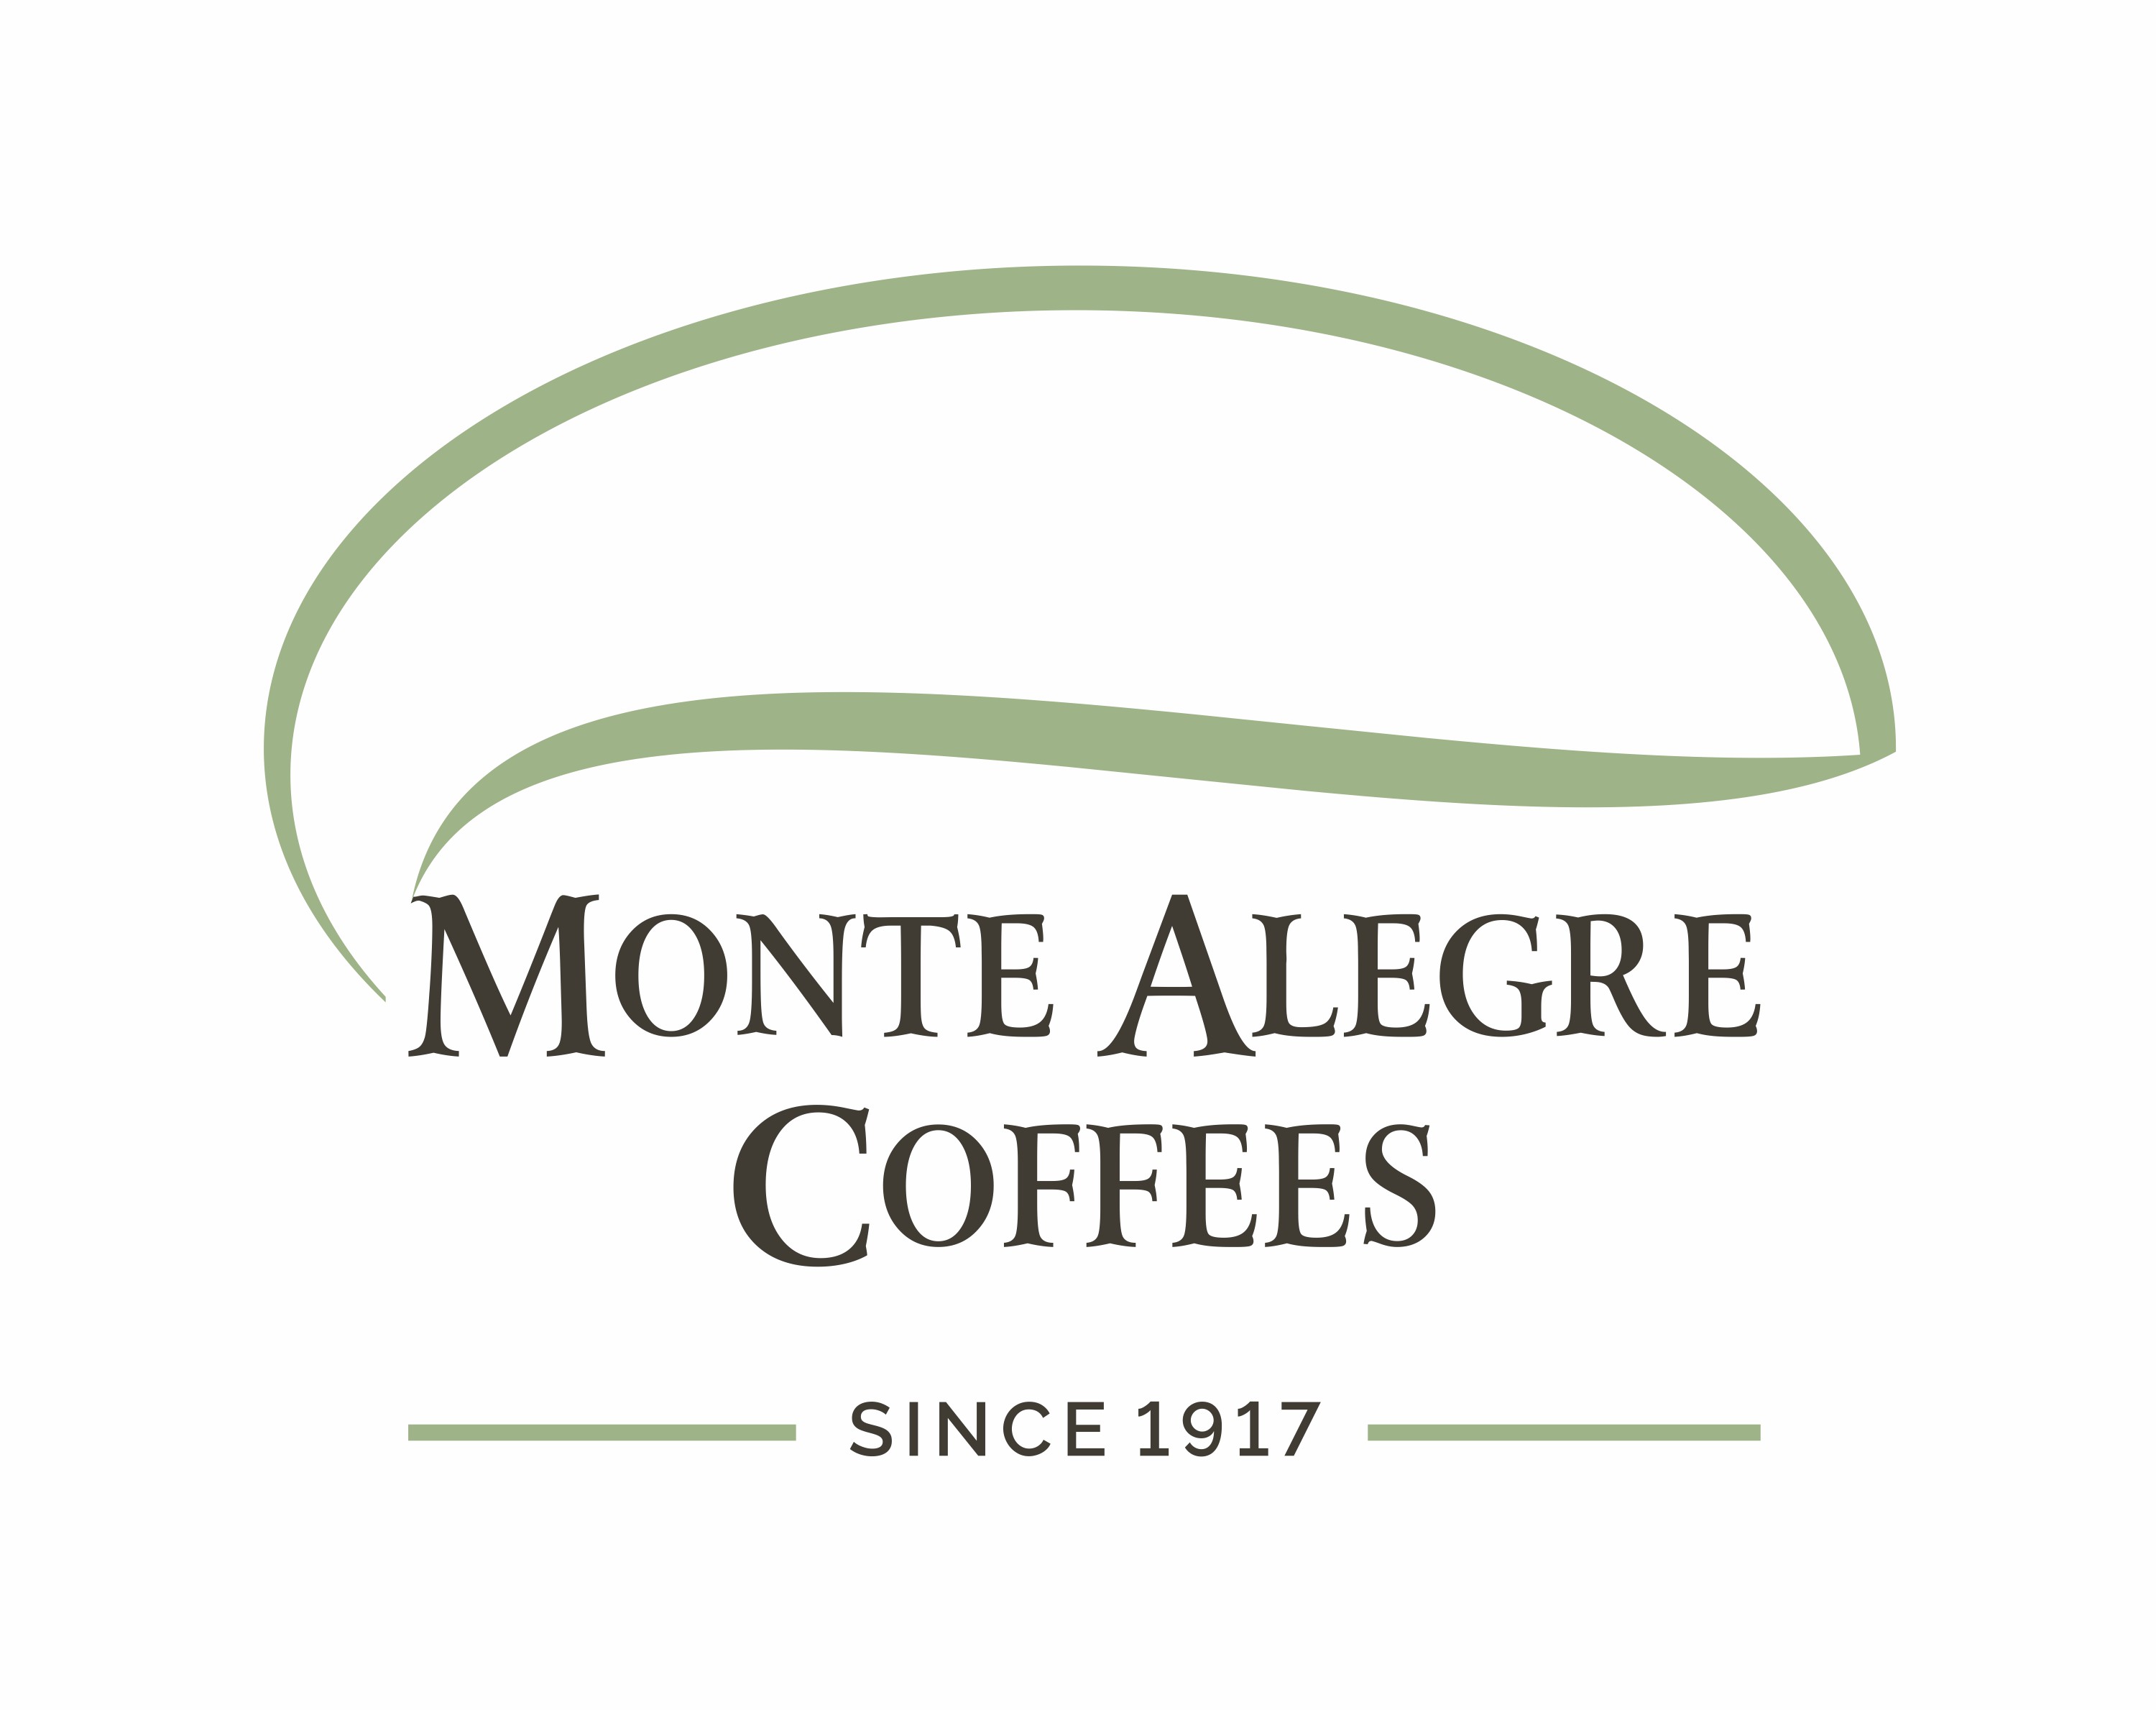 Cia Agropecuária Monte Alegre (Monte Alegre Coffees)